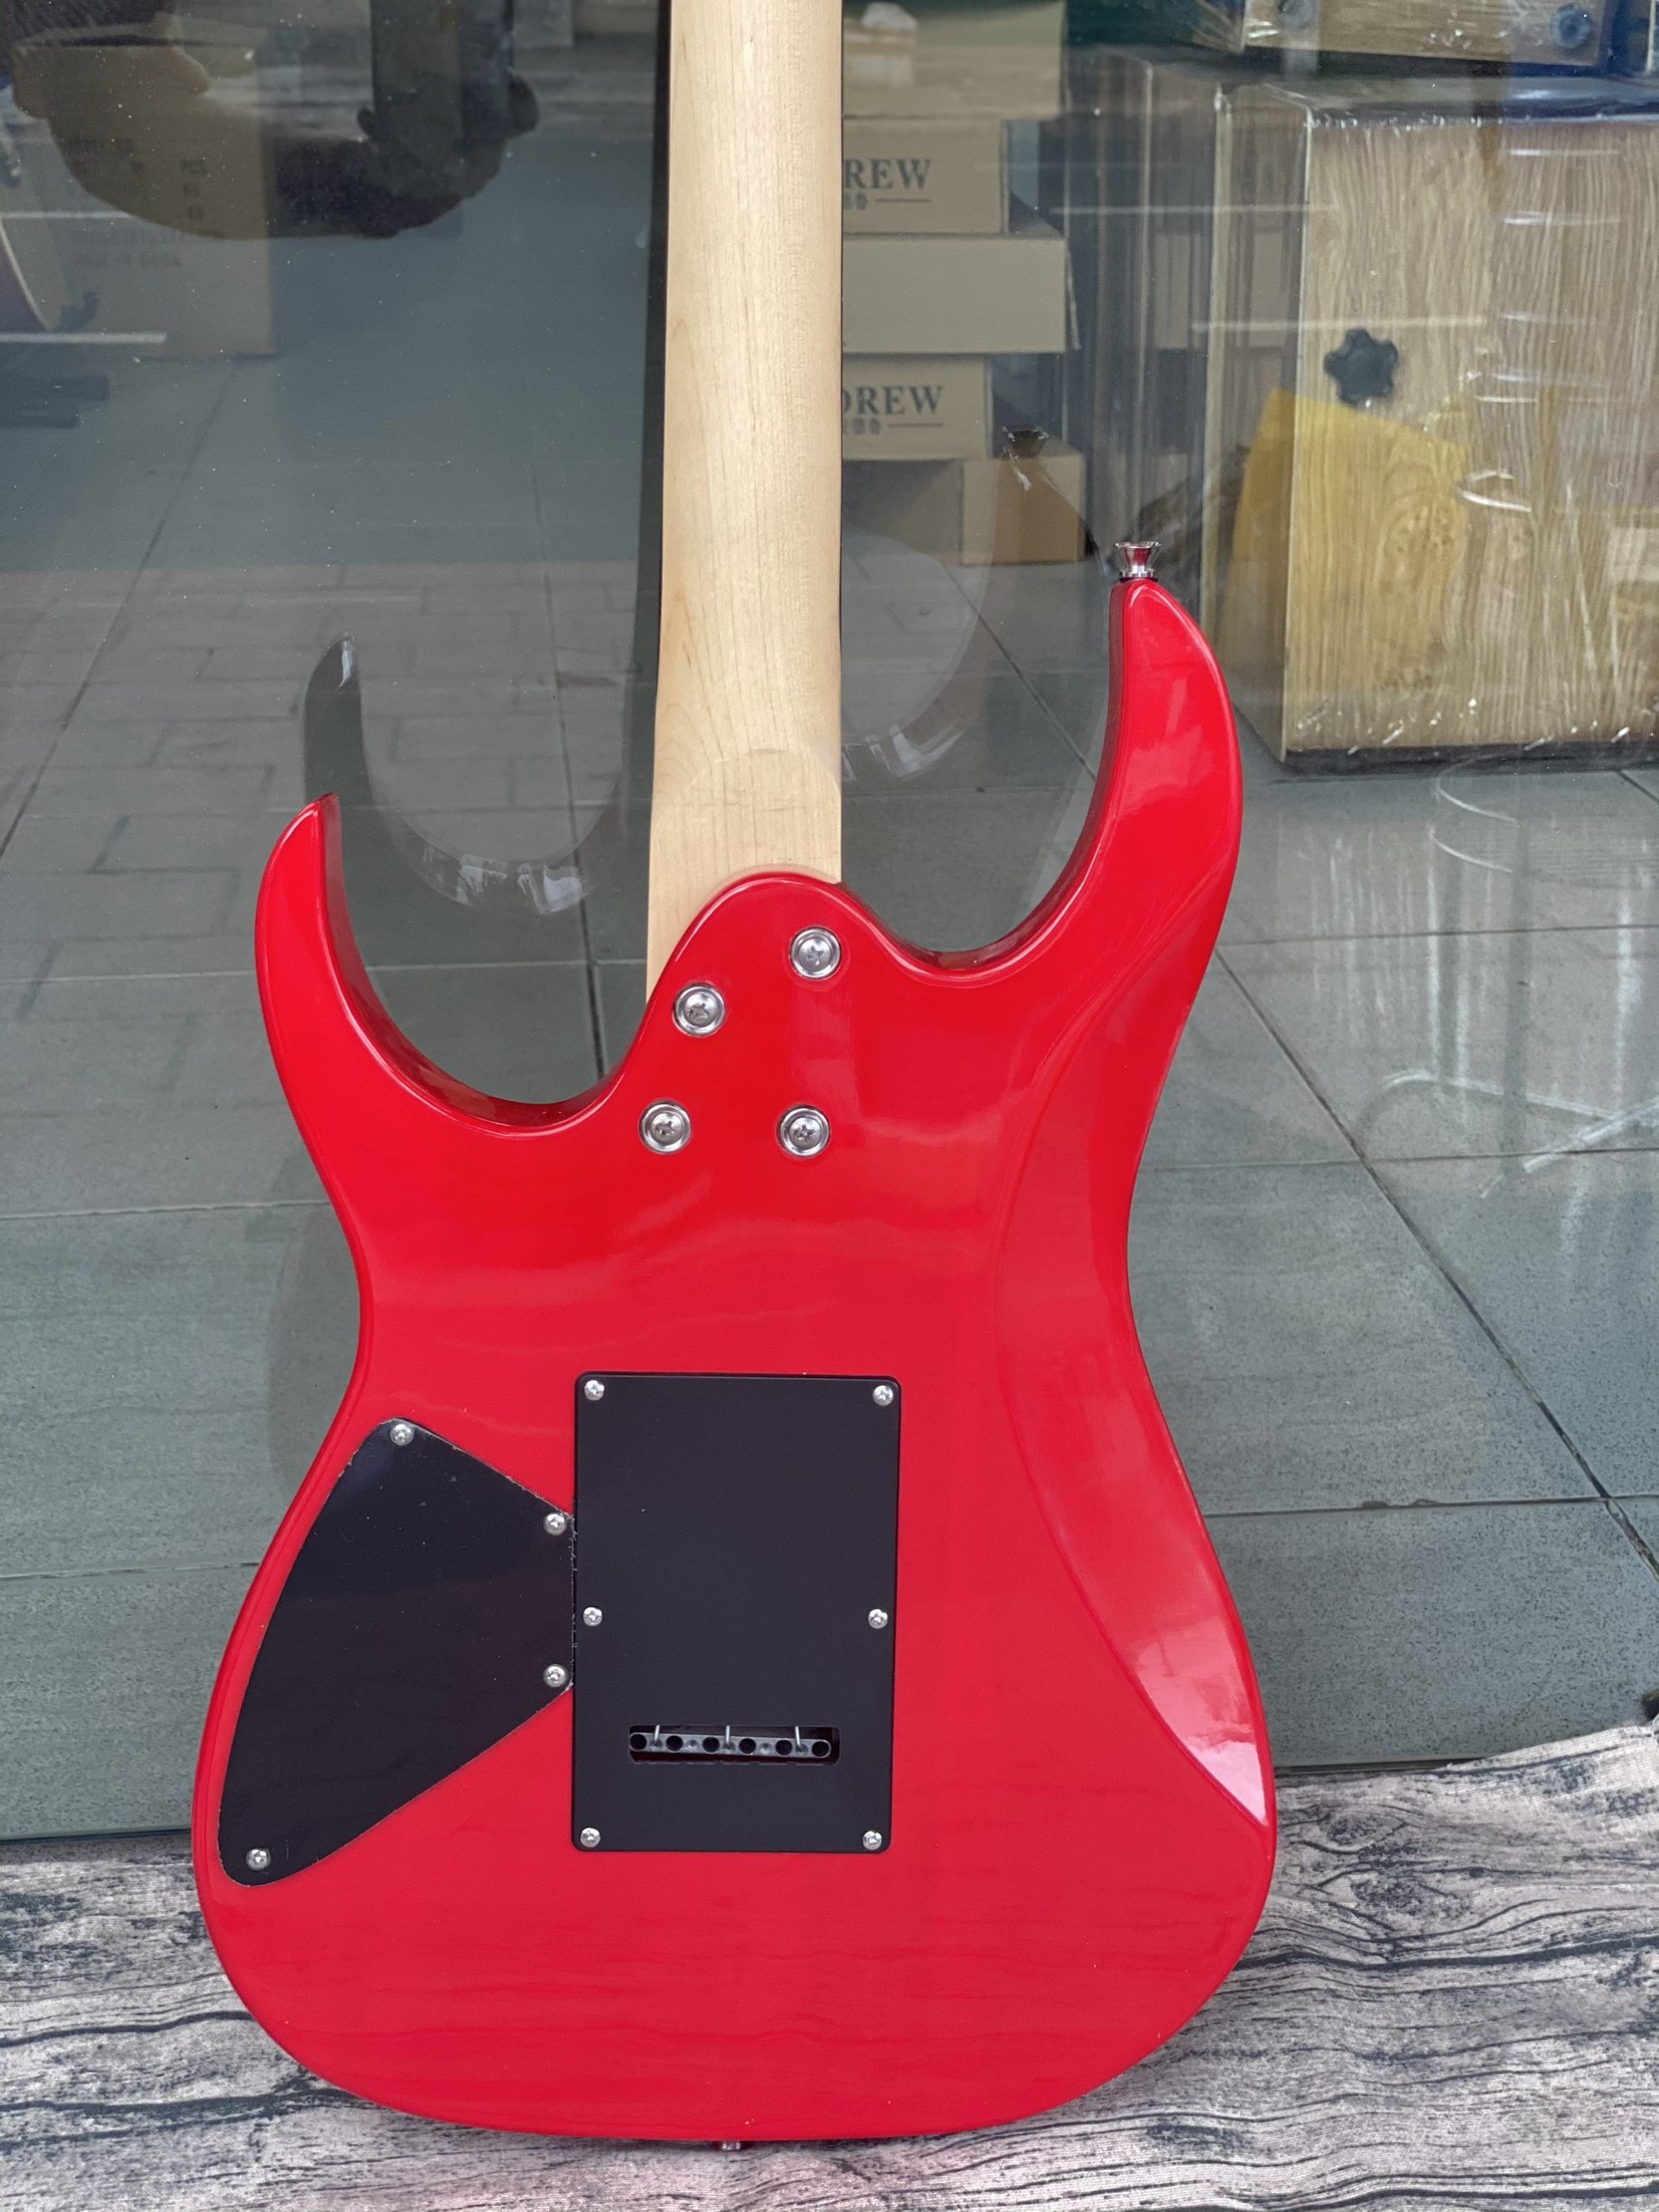 Guitar điện 5 mobin Dallas DL- S5